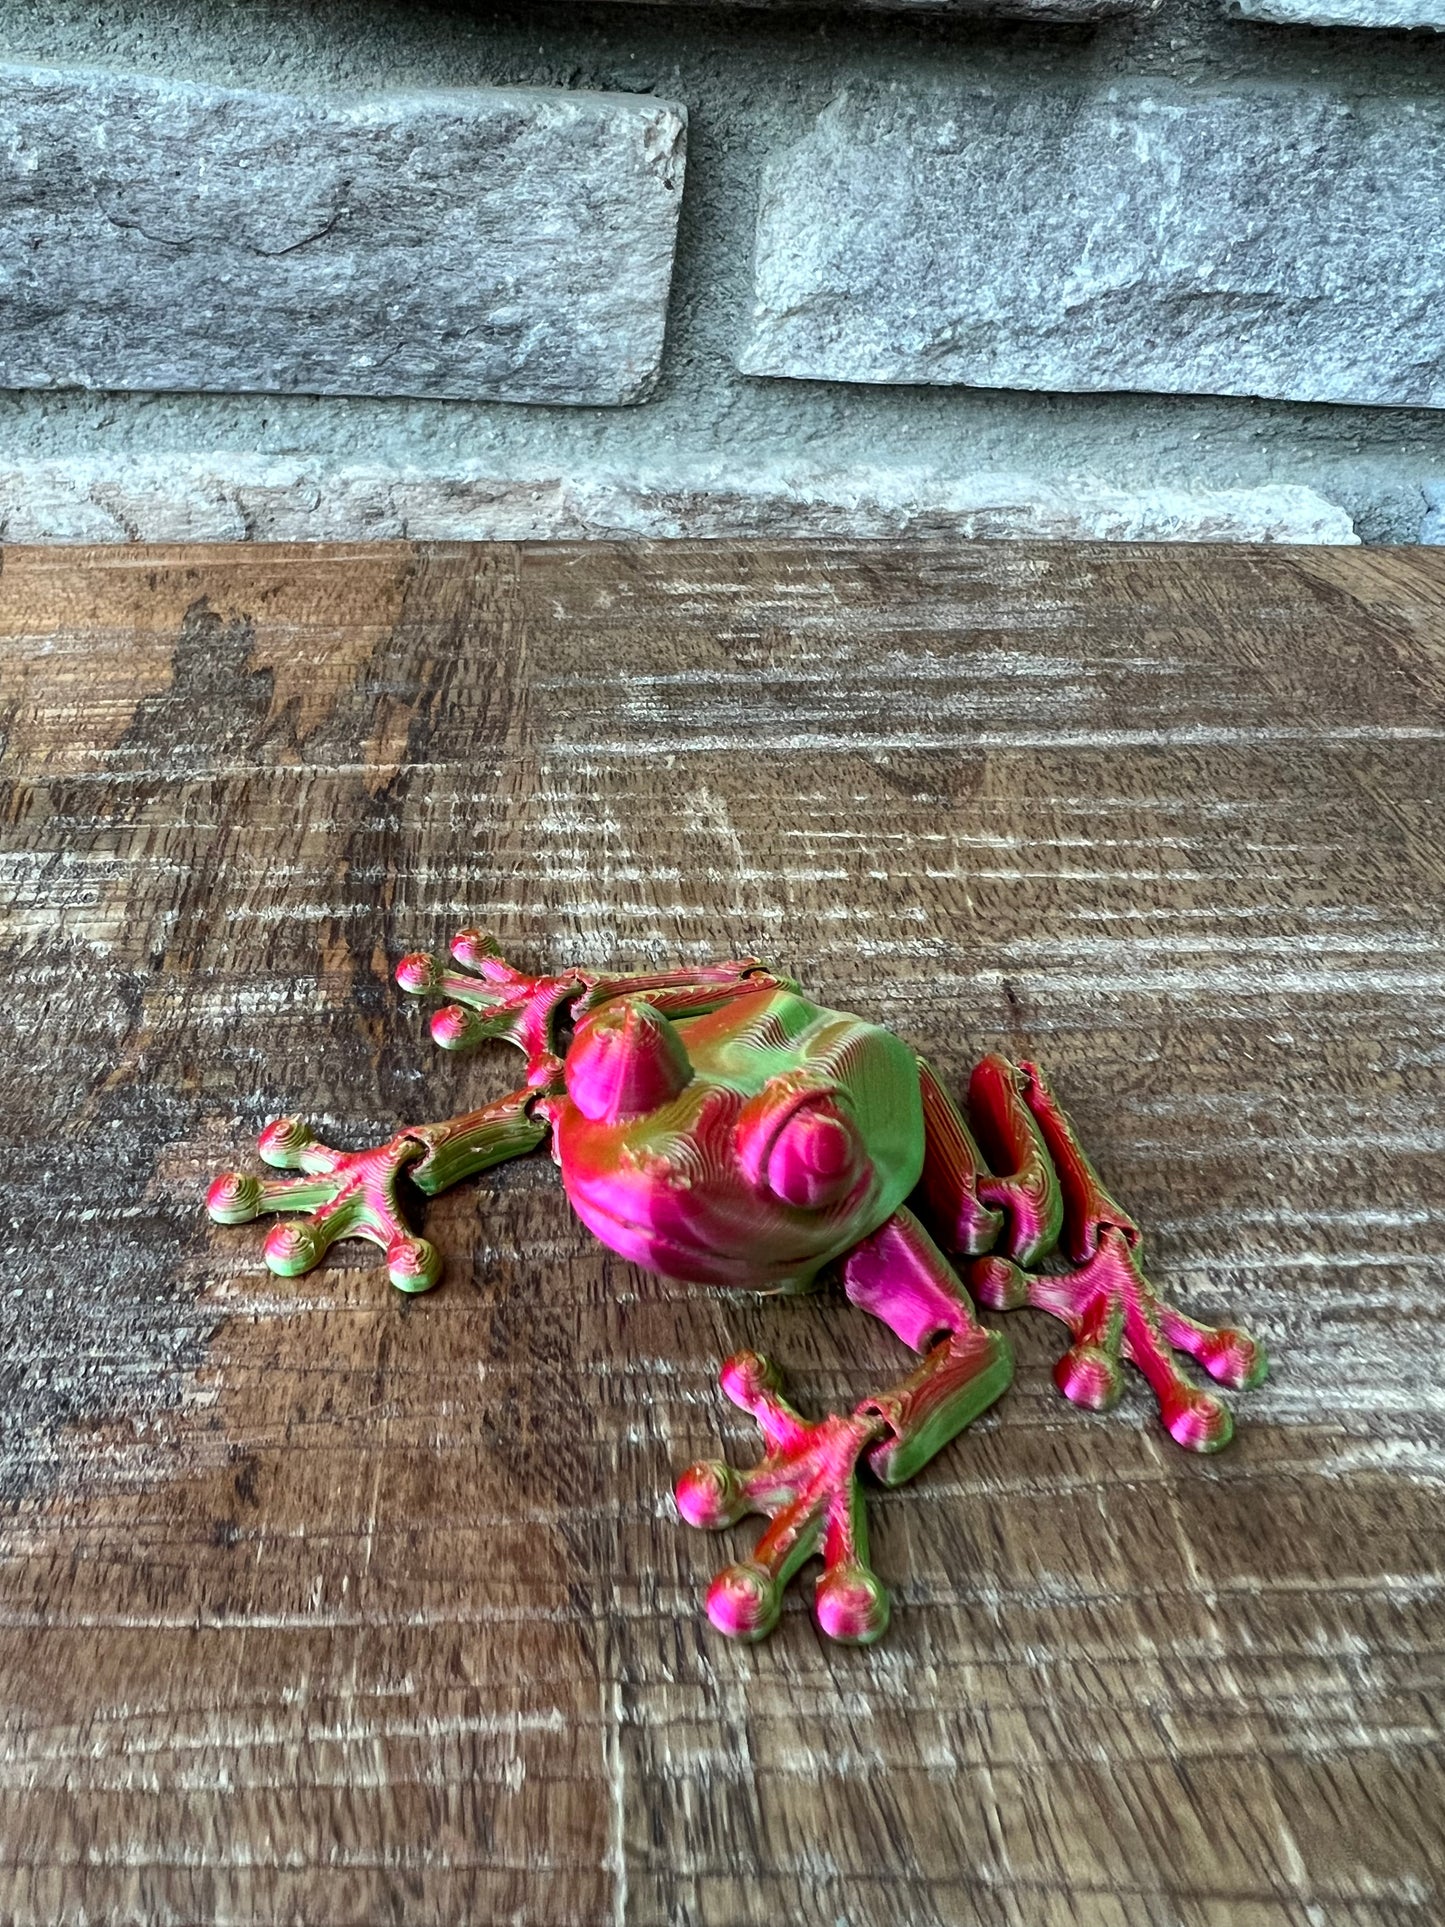 MINI Frog | 3d Printed |  Articulated Flexible | Custom Fidget Toy